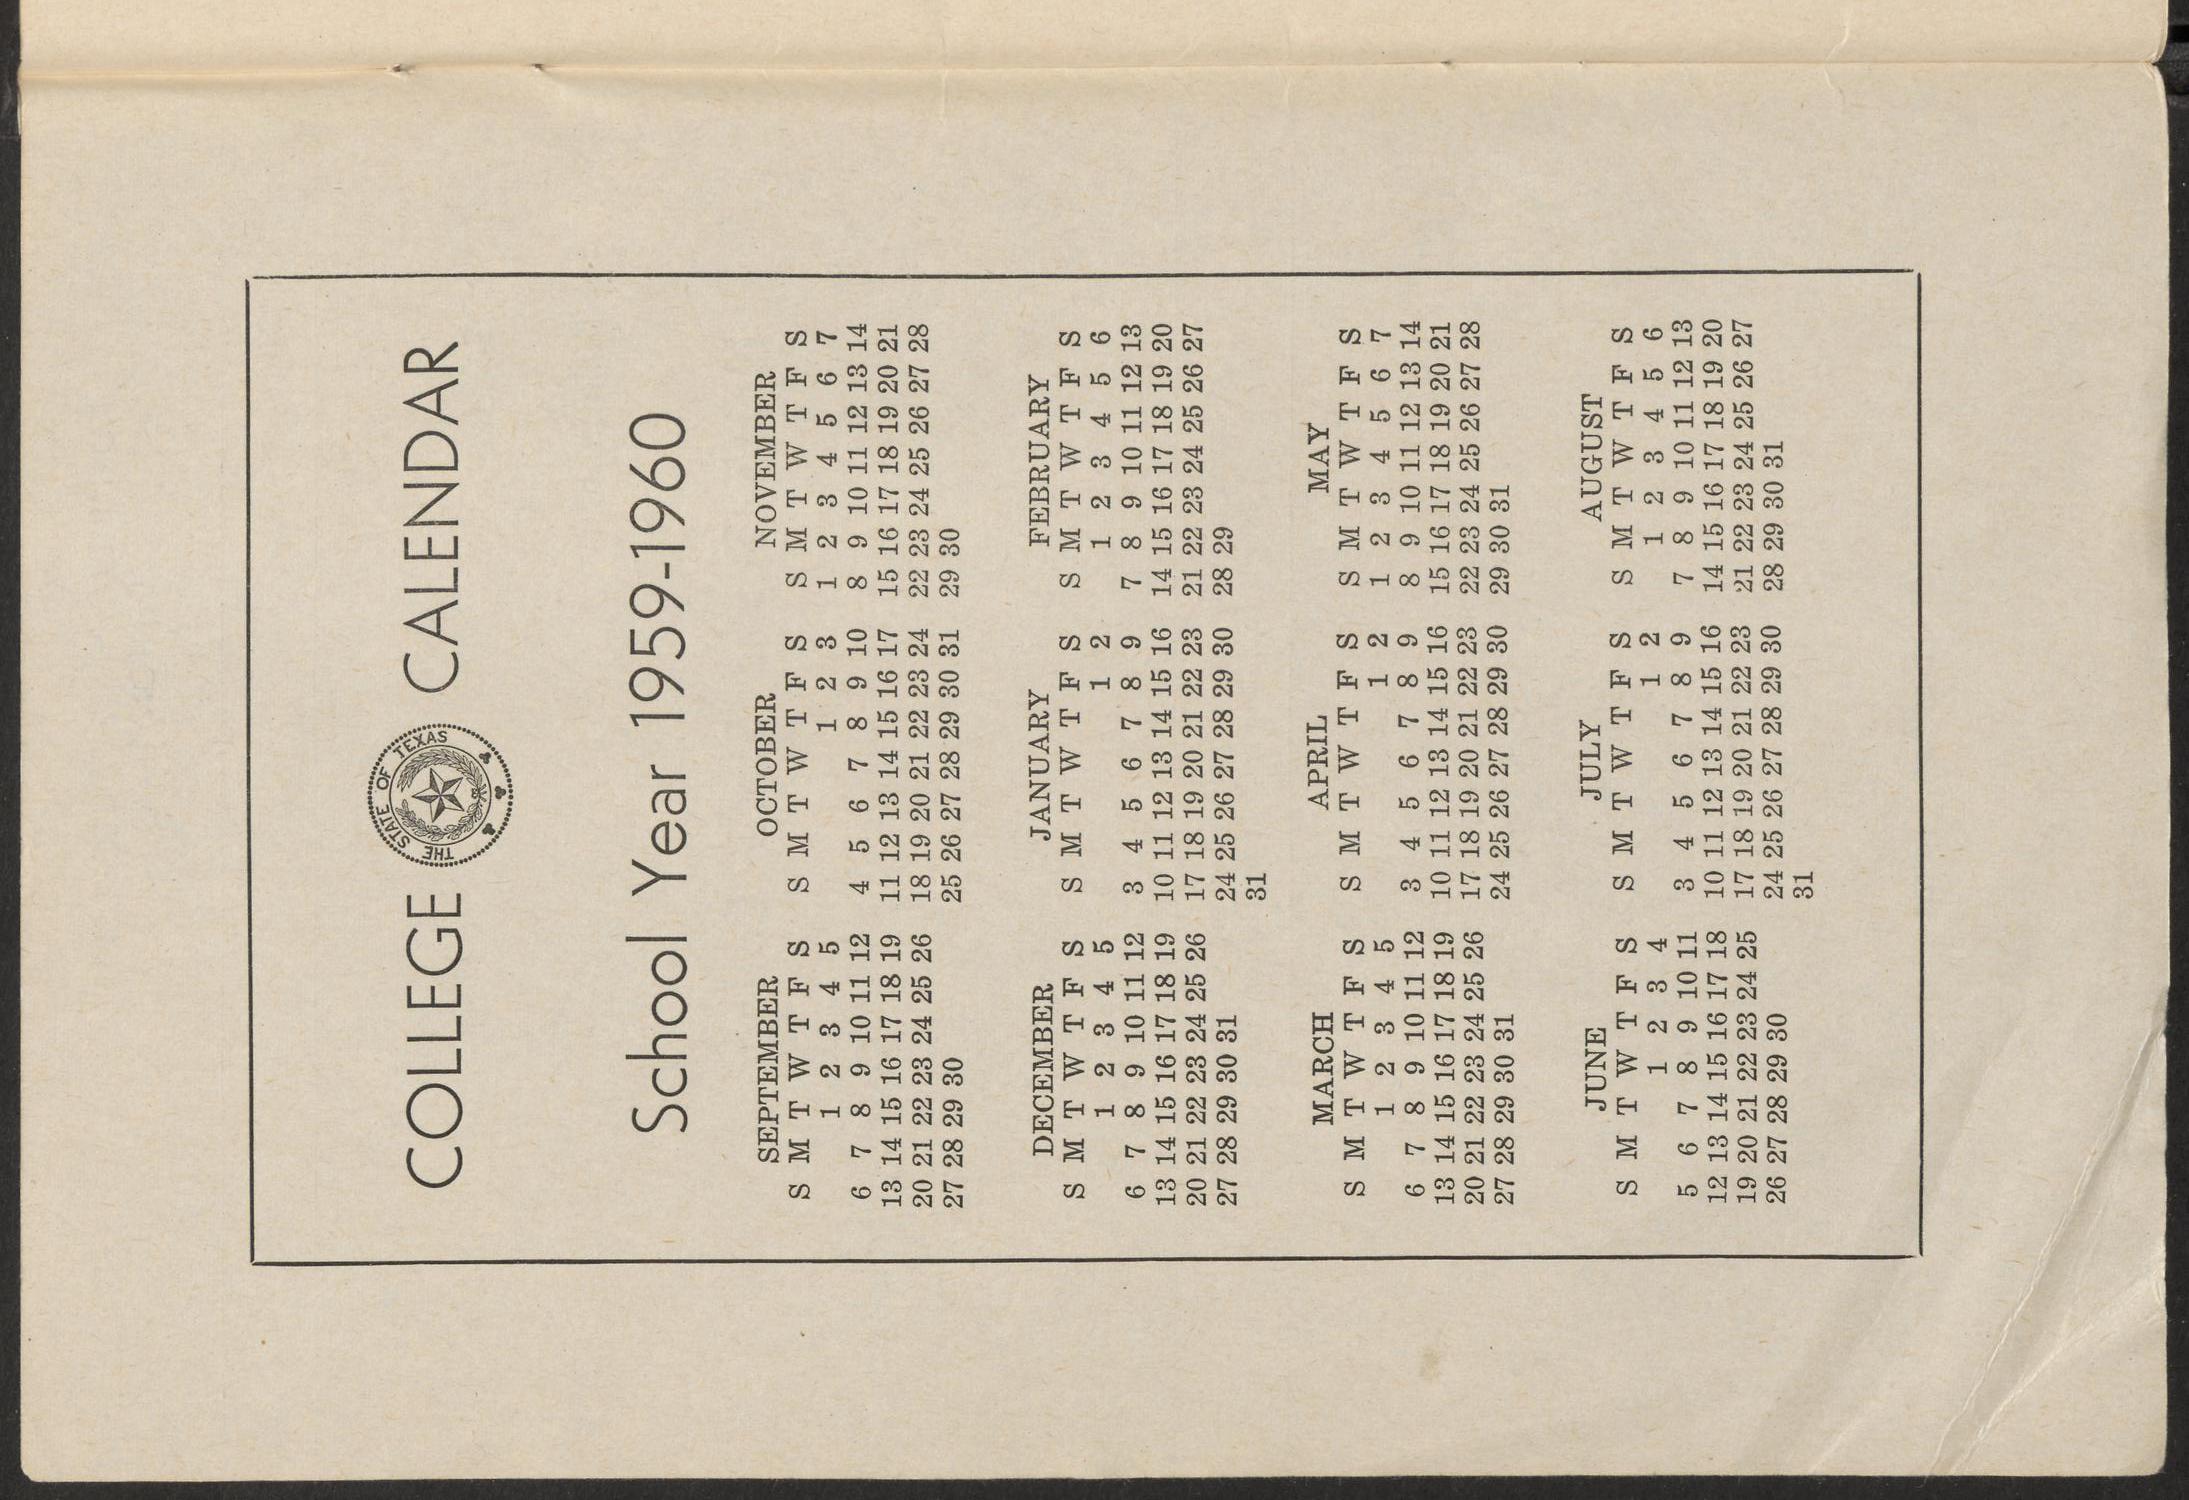 Catalog of North Texas State College: 1959-1960, Graduate
                                                
                                                    2
                                                